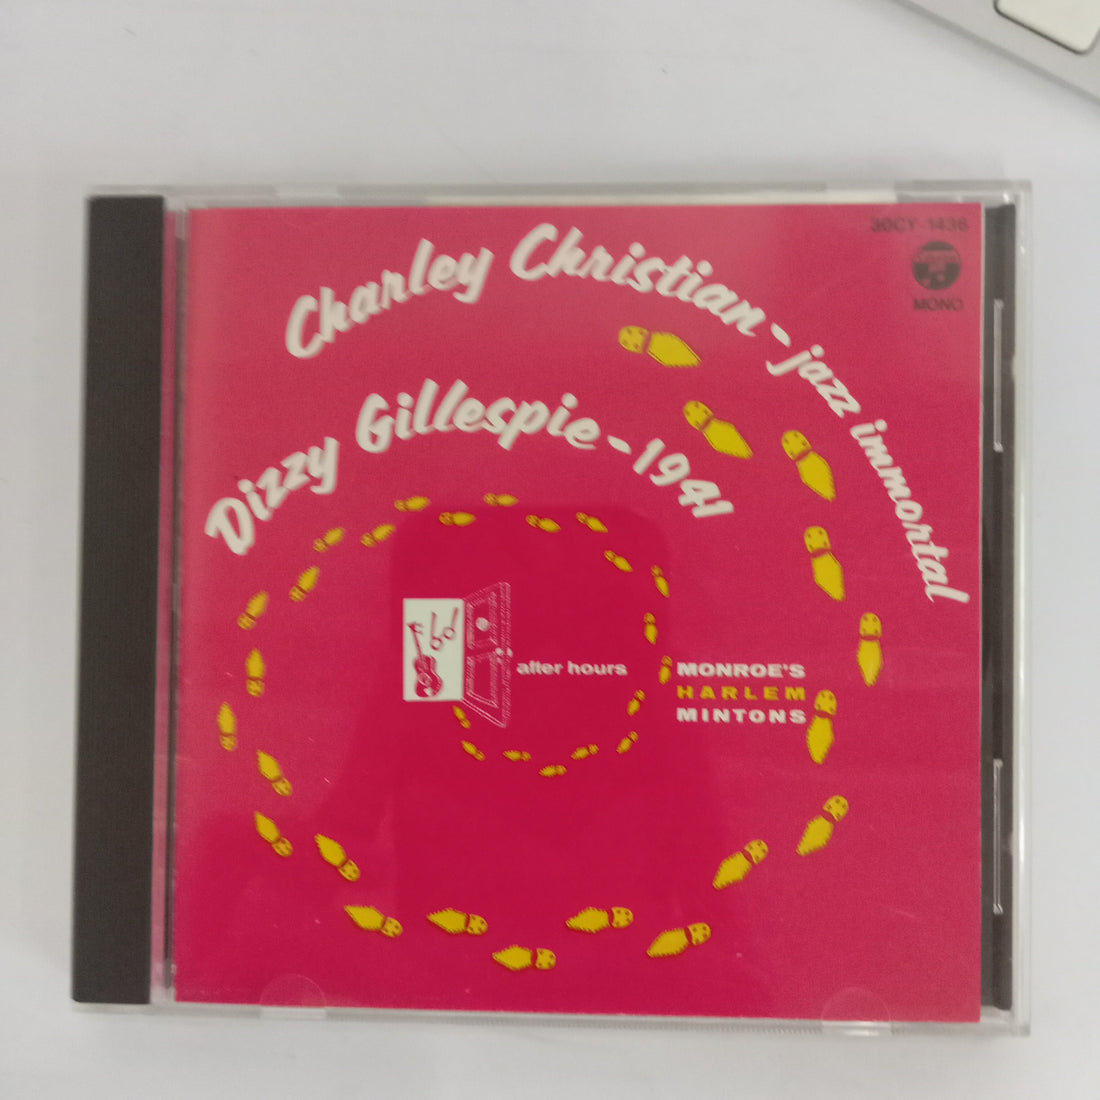 Charlie Christian - Jazz Immortal (CD) (VG+)